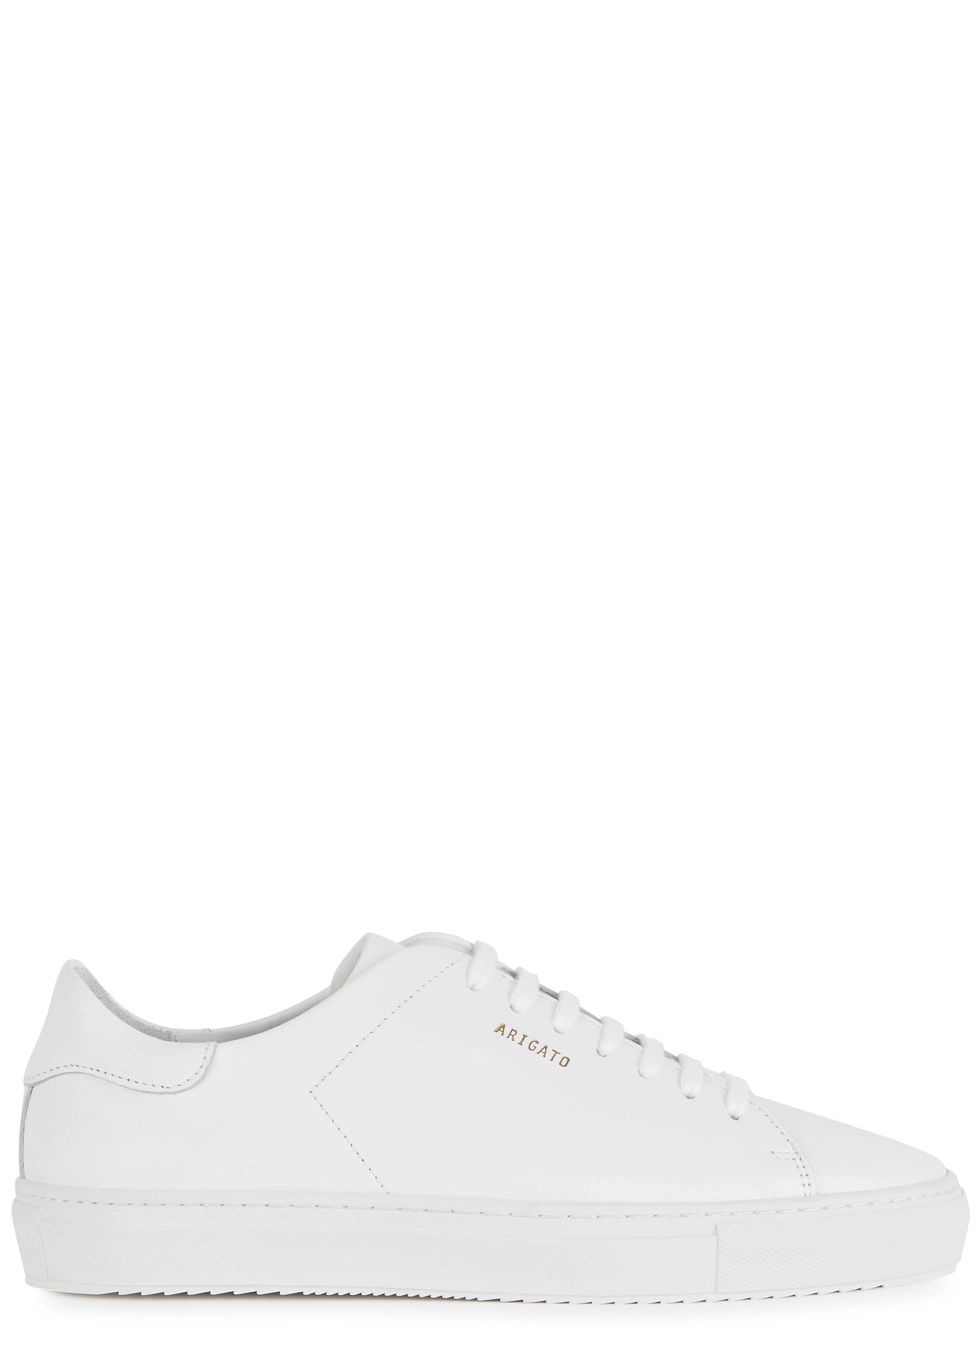 Clean 90 white leather sneakers | Harvey Nichols (Global)